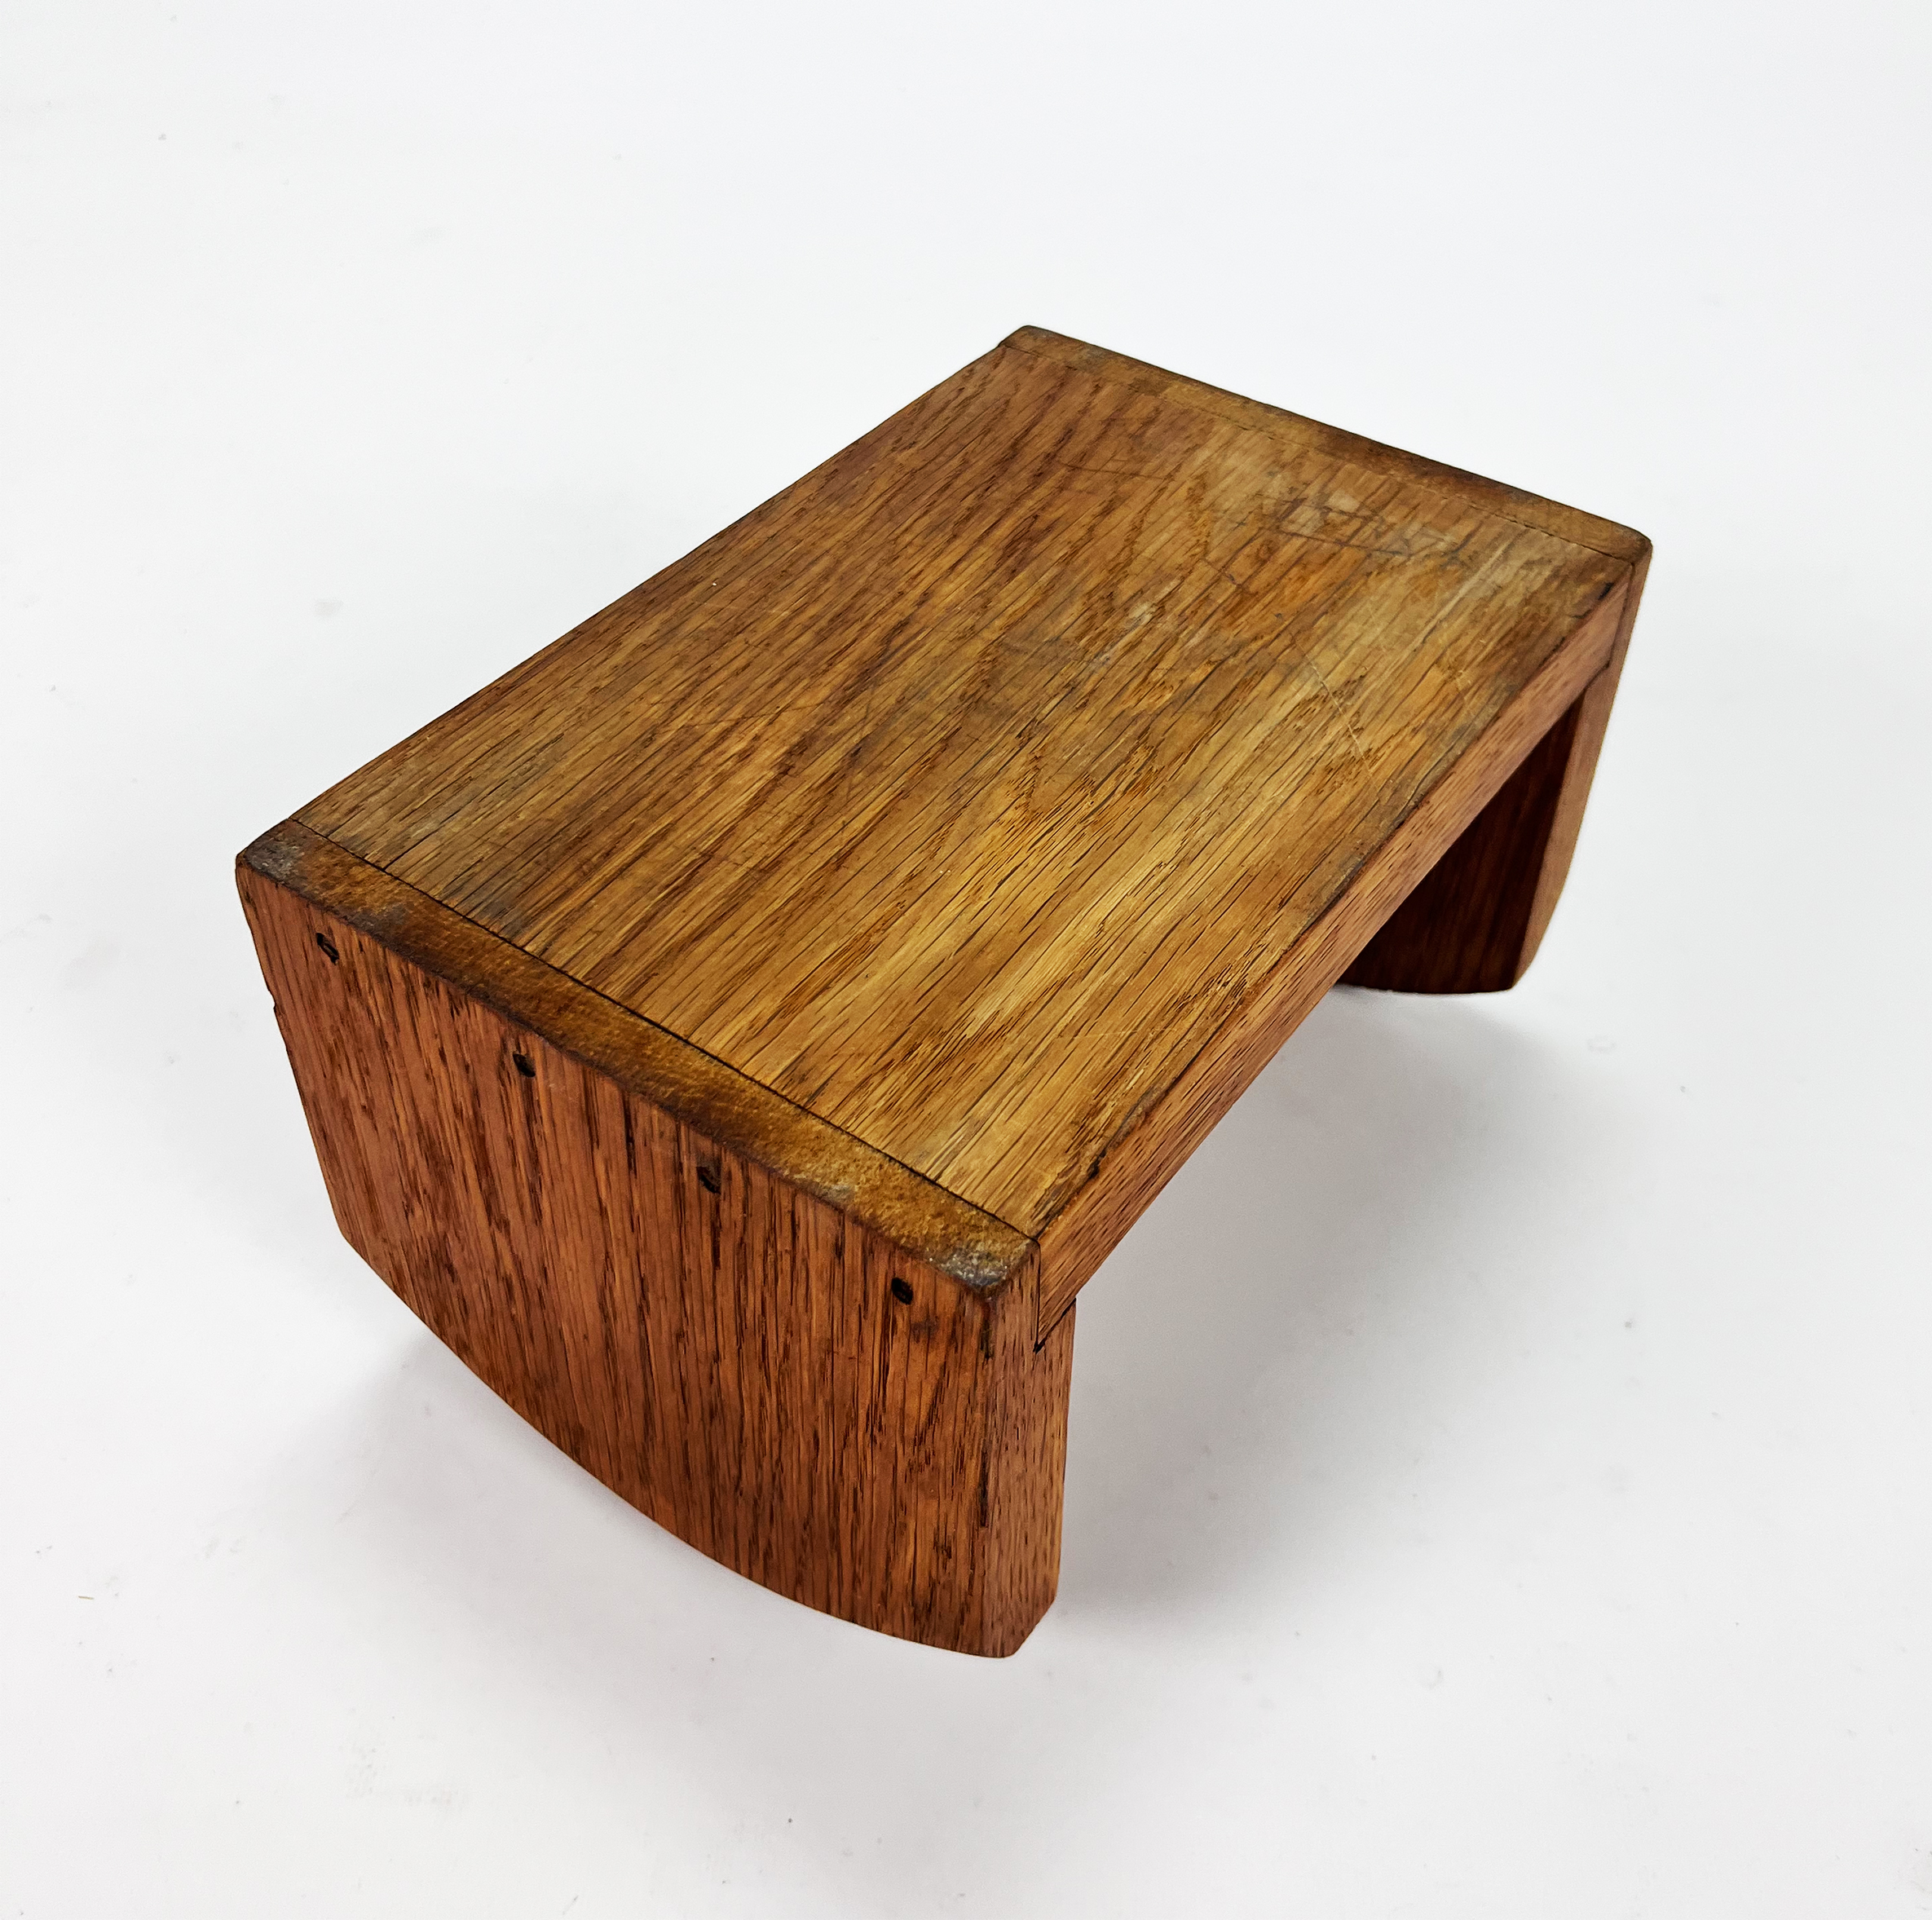 Antique wooden item, 1920s